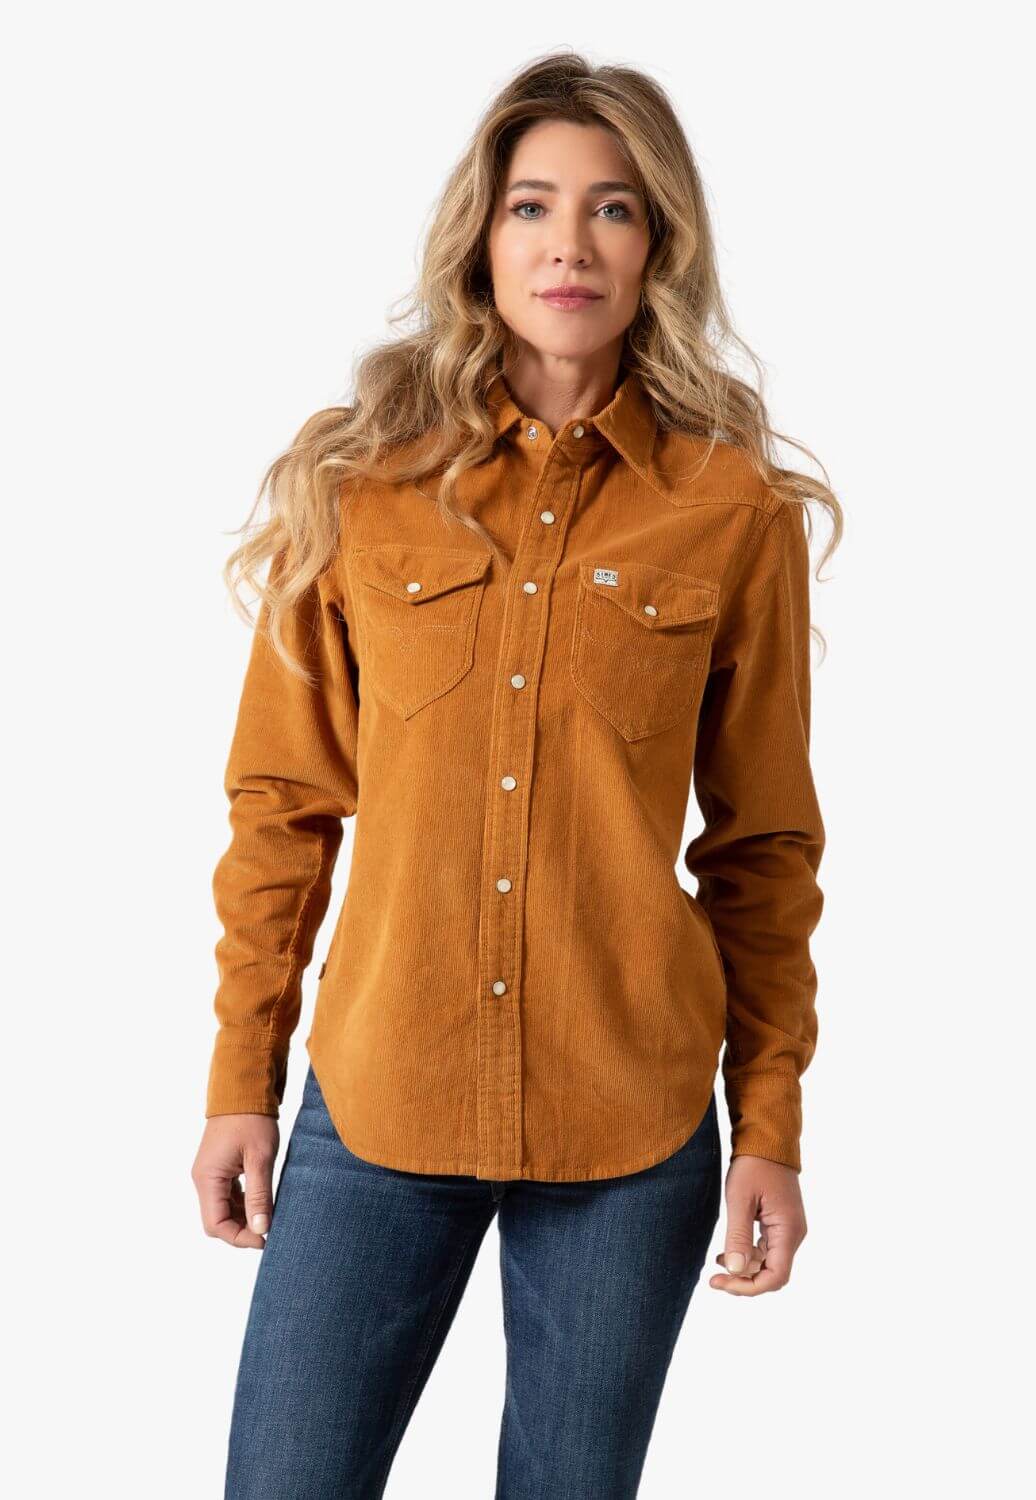 Kimes Ranch Womens Dixon Cordaroy Long Sleeve Shirt